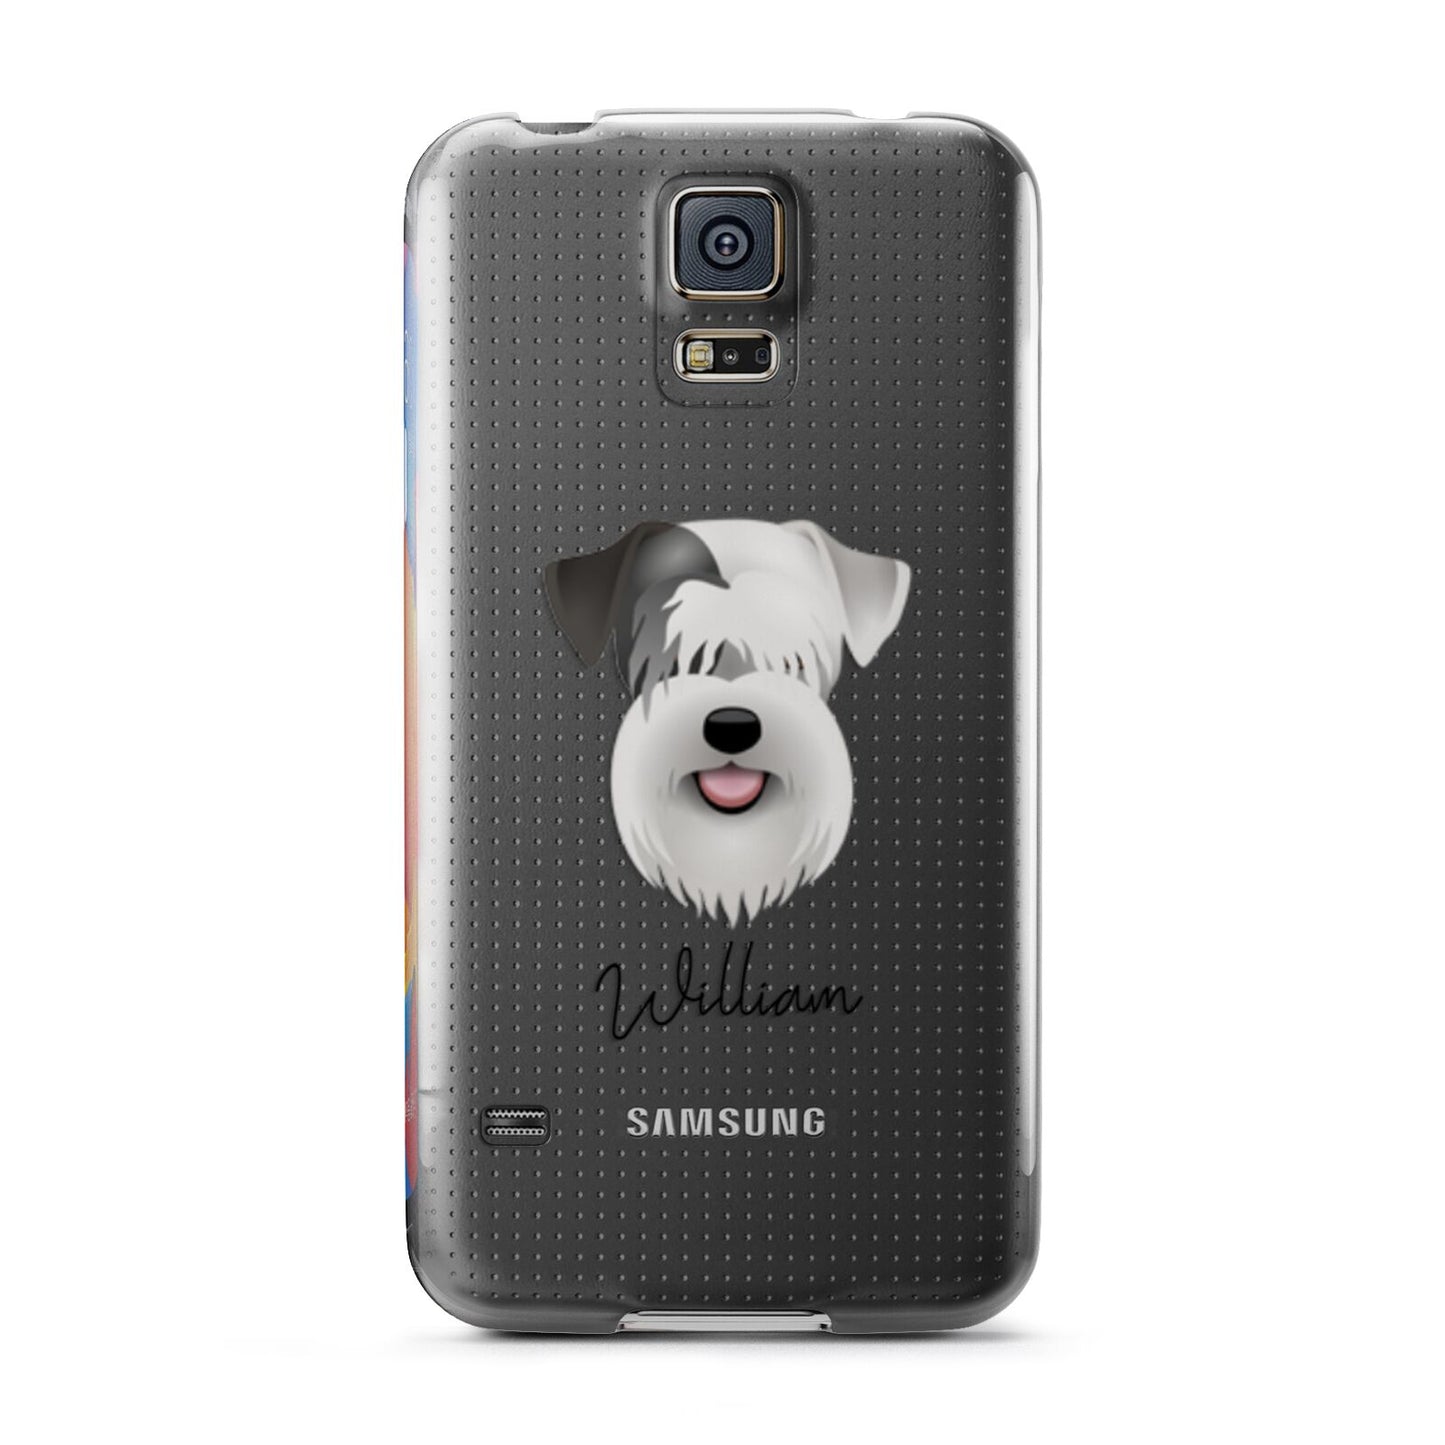 Sealyham Terrier Personalised Samsung Galaxy S5 Case